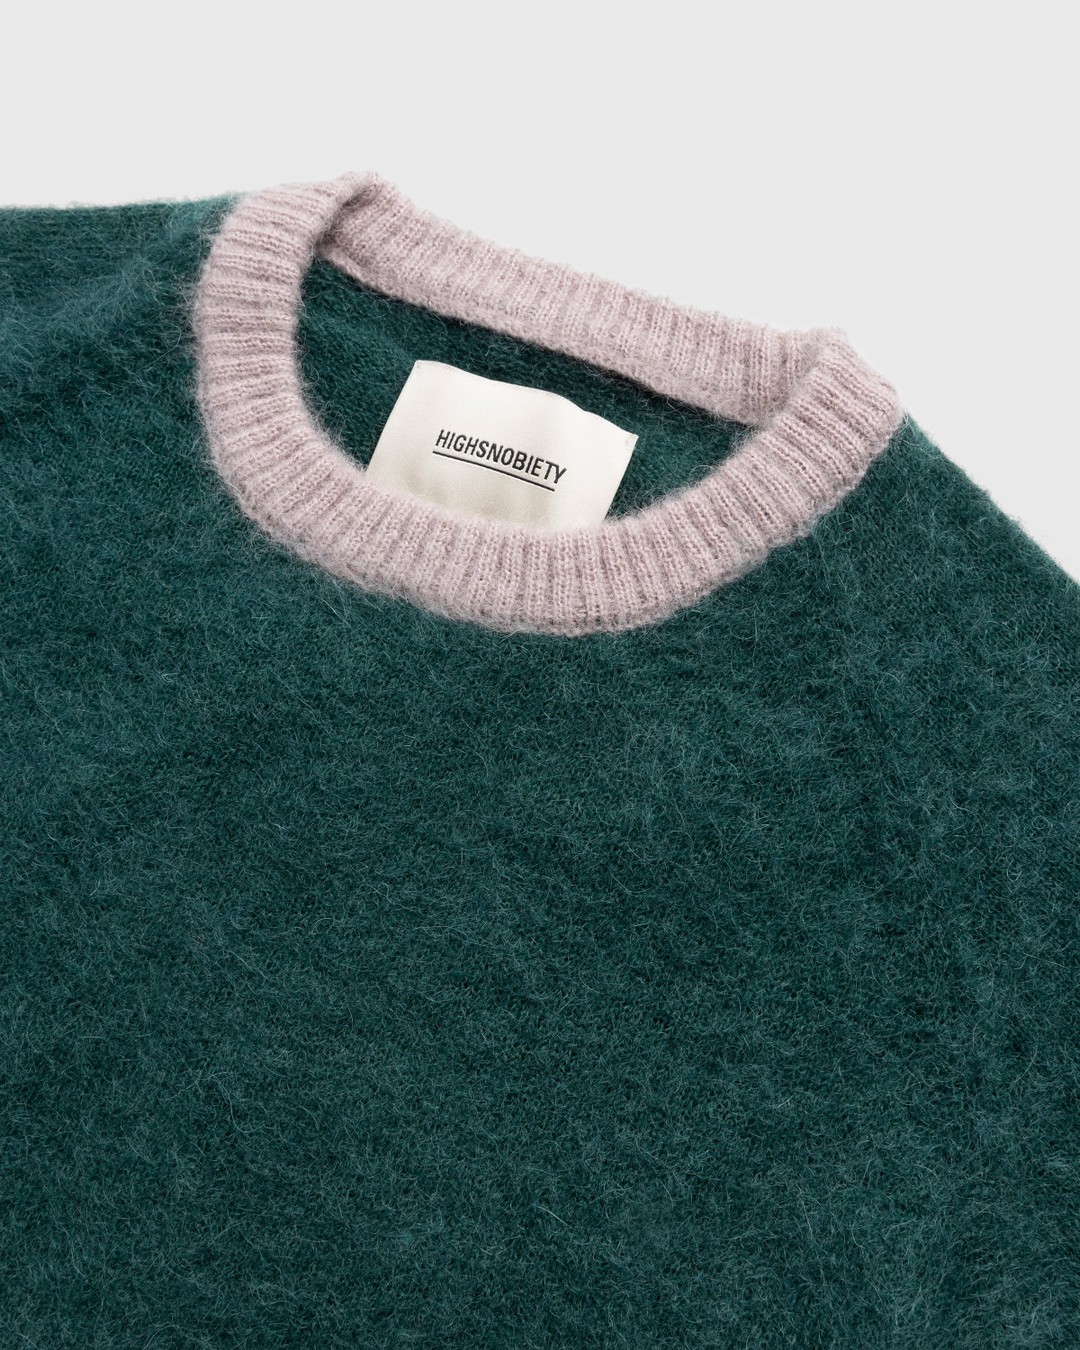 Highsnobiety – Alpaca Sweater Green Kids - Crewnecks - Green - Image 3